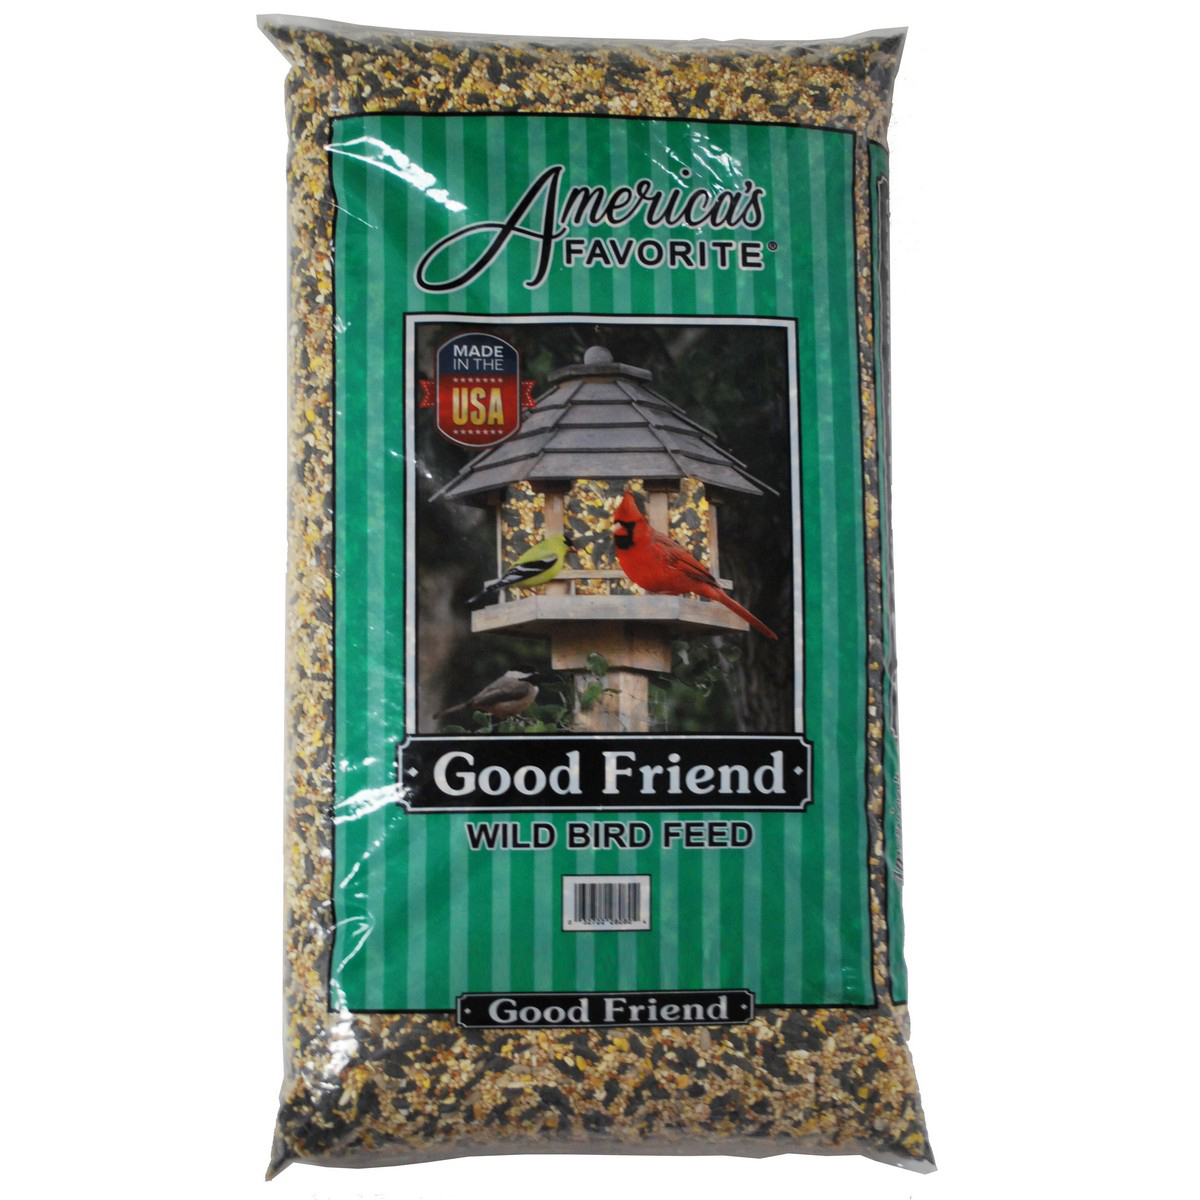 Picture of Americas Favorite 280080 10 lbs Good Friend Wild Bird Feed Dark Green Stripe Bag, Dark Green Stripe